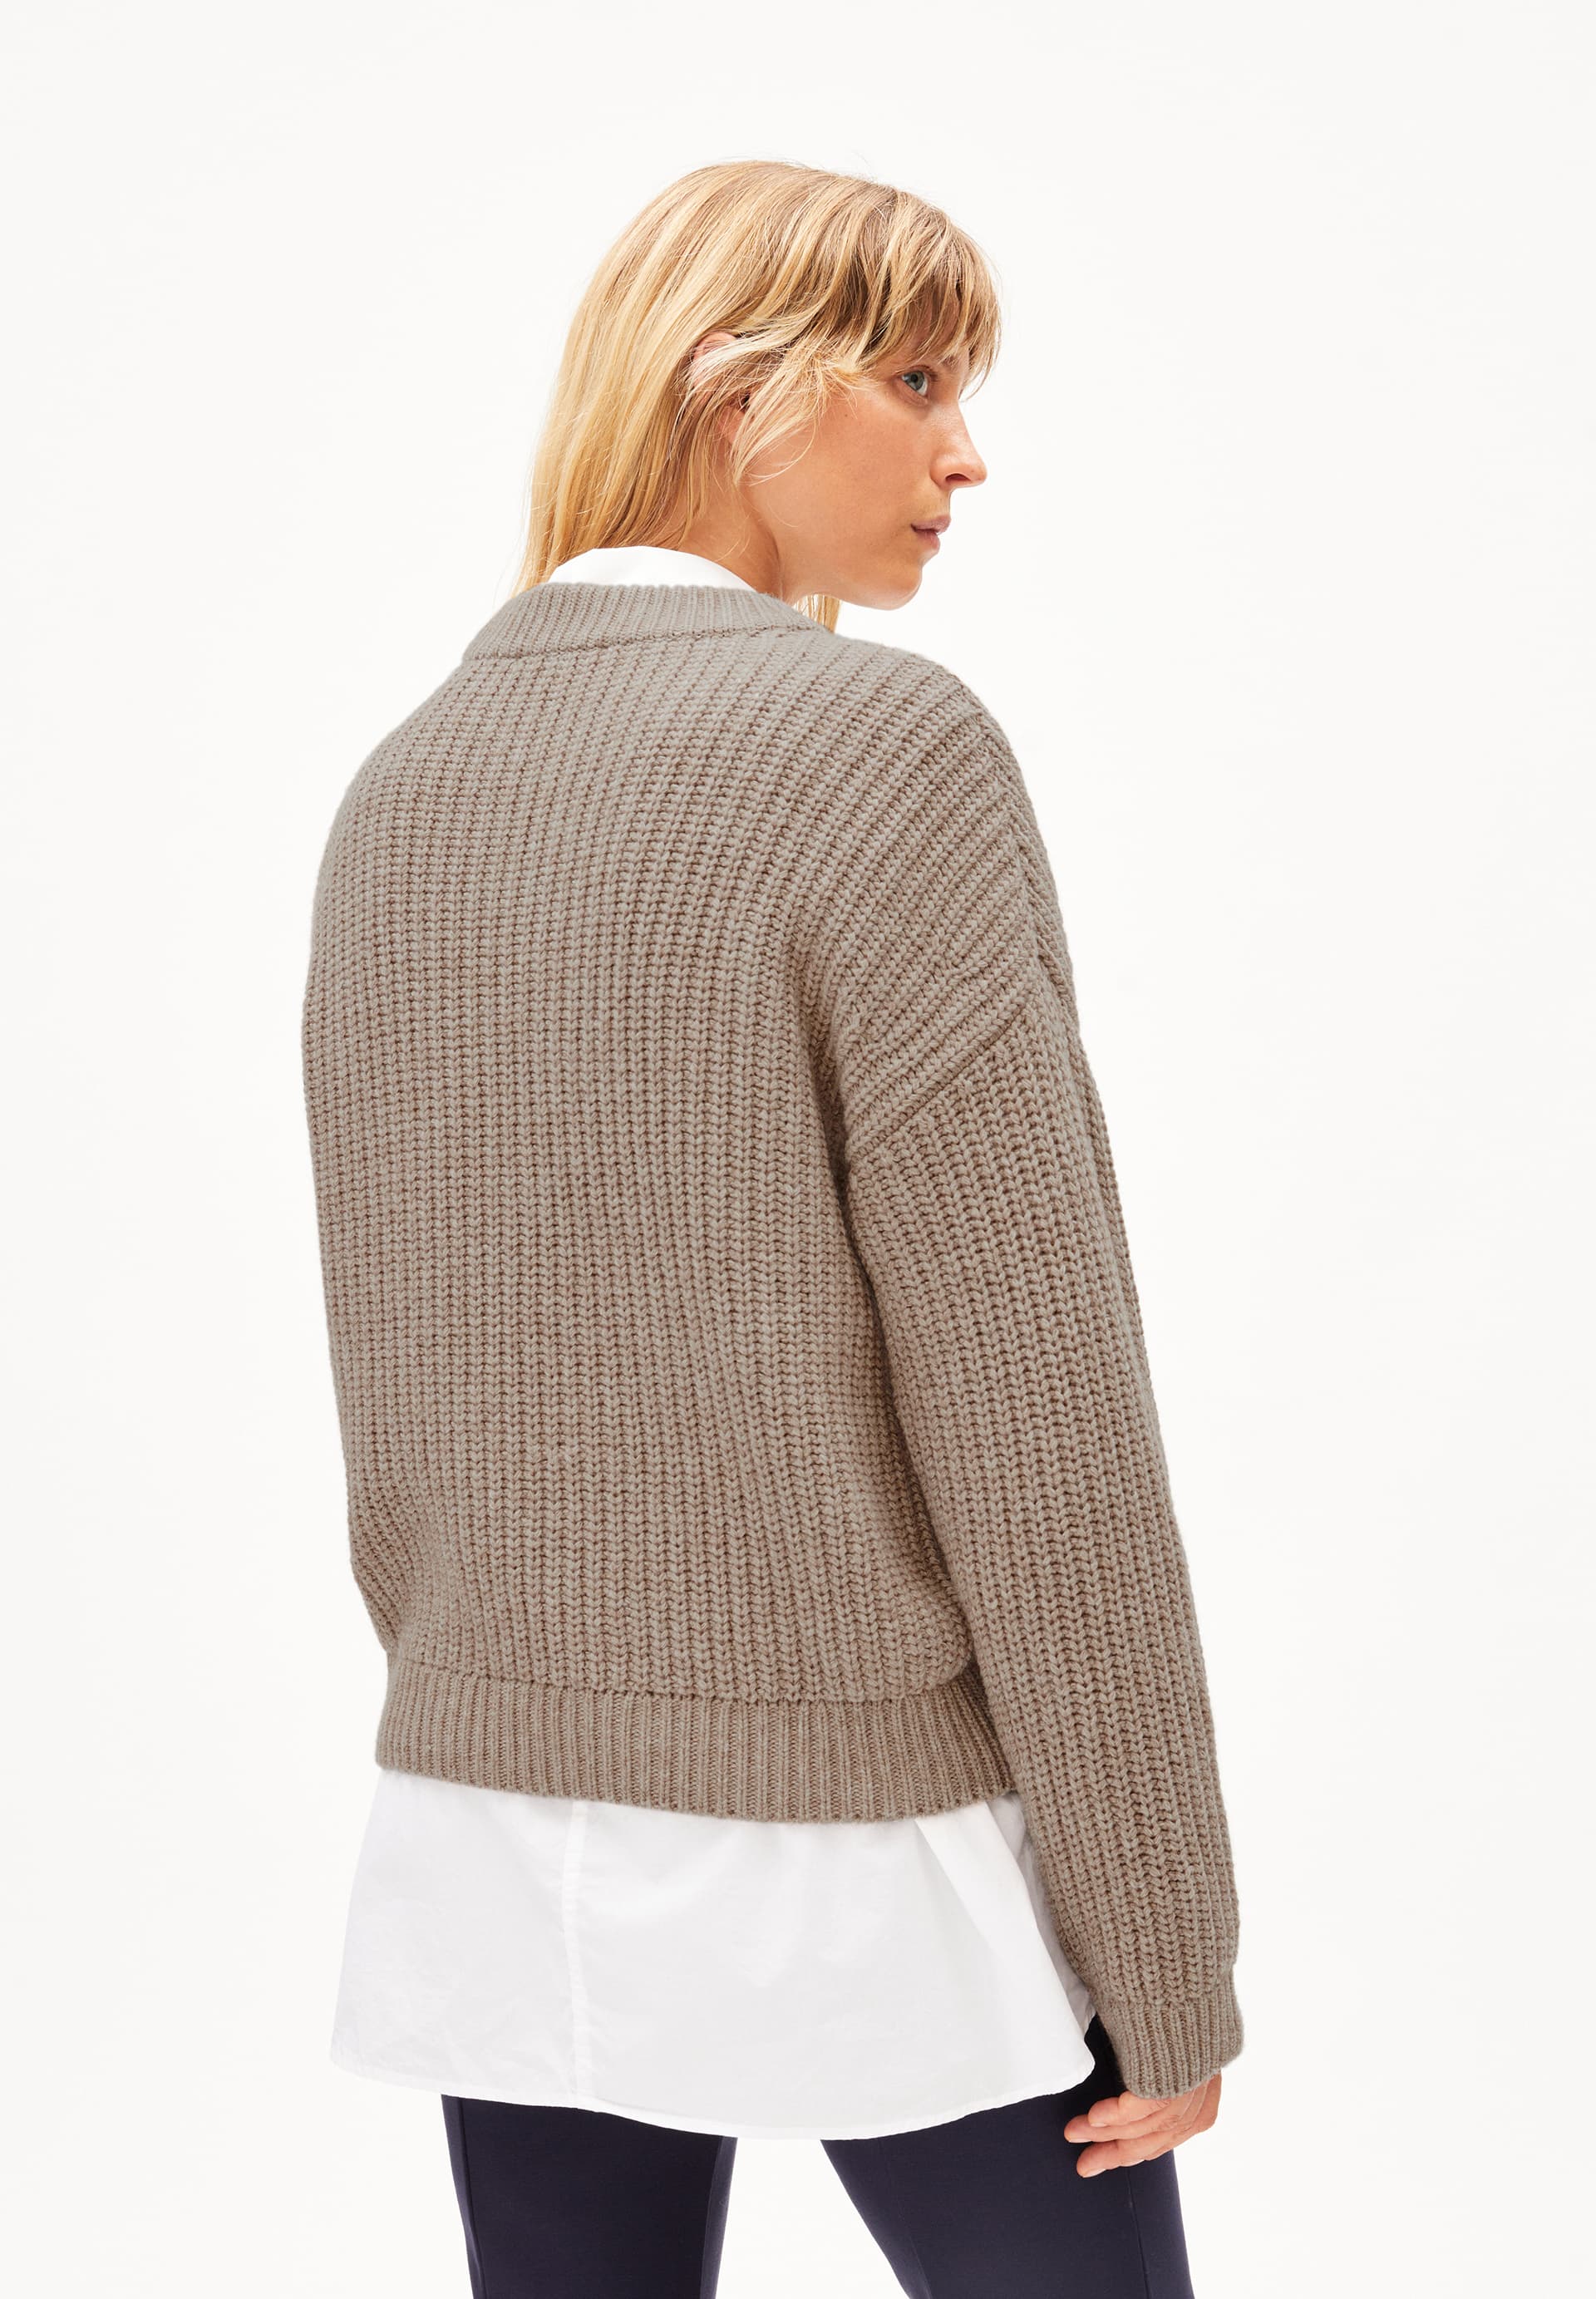 MIYAAR SOLID Sweater made of Organic Wool Mix